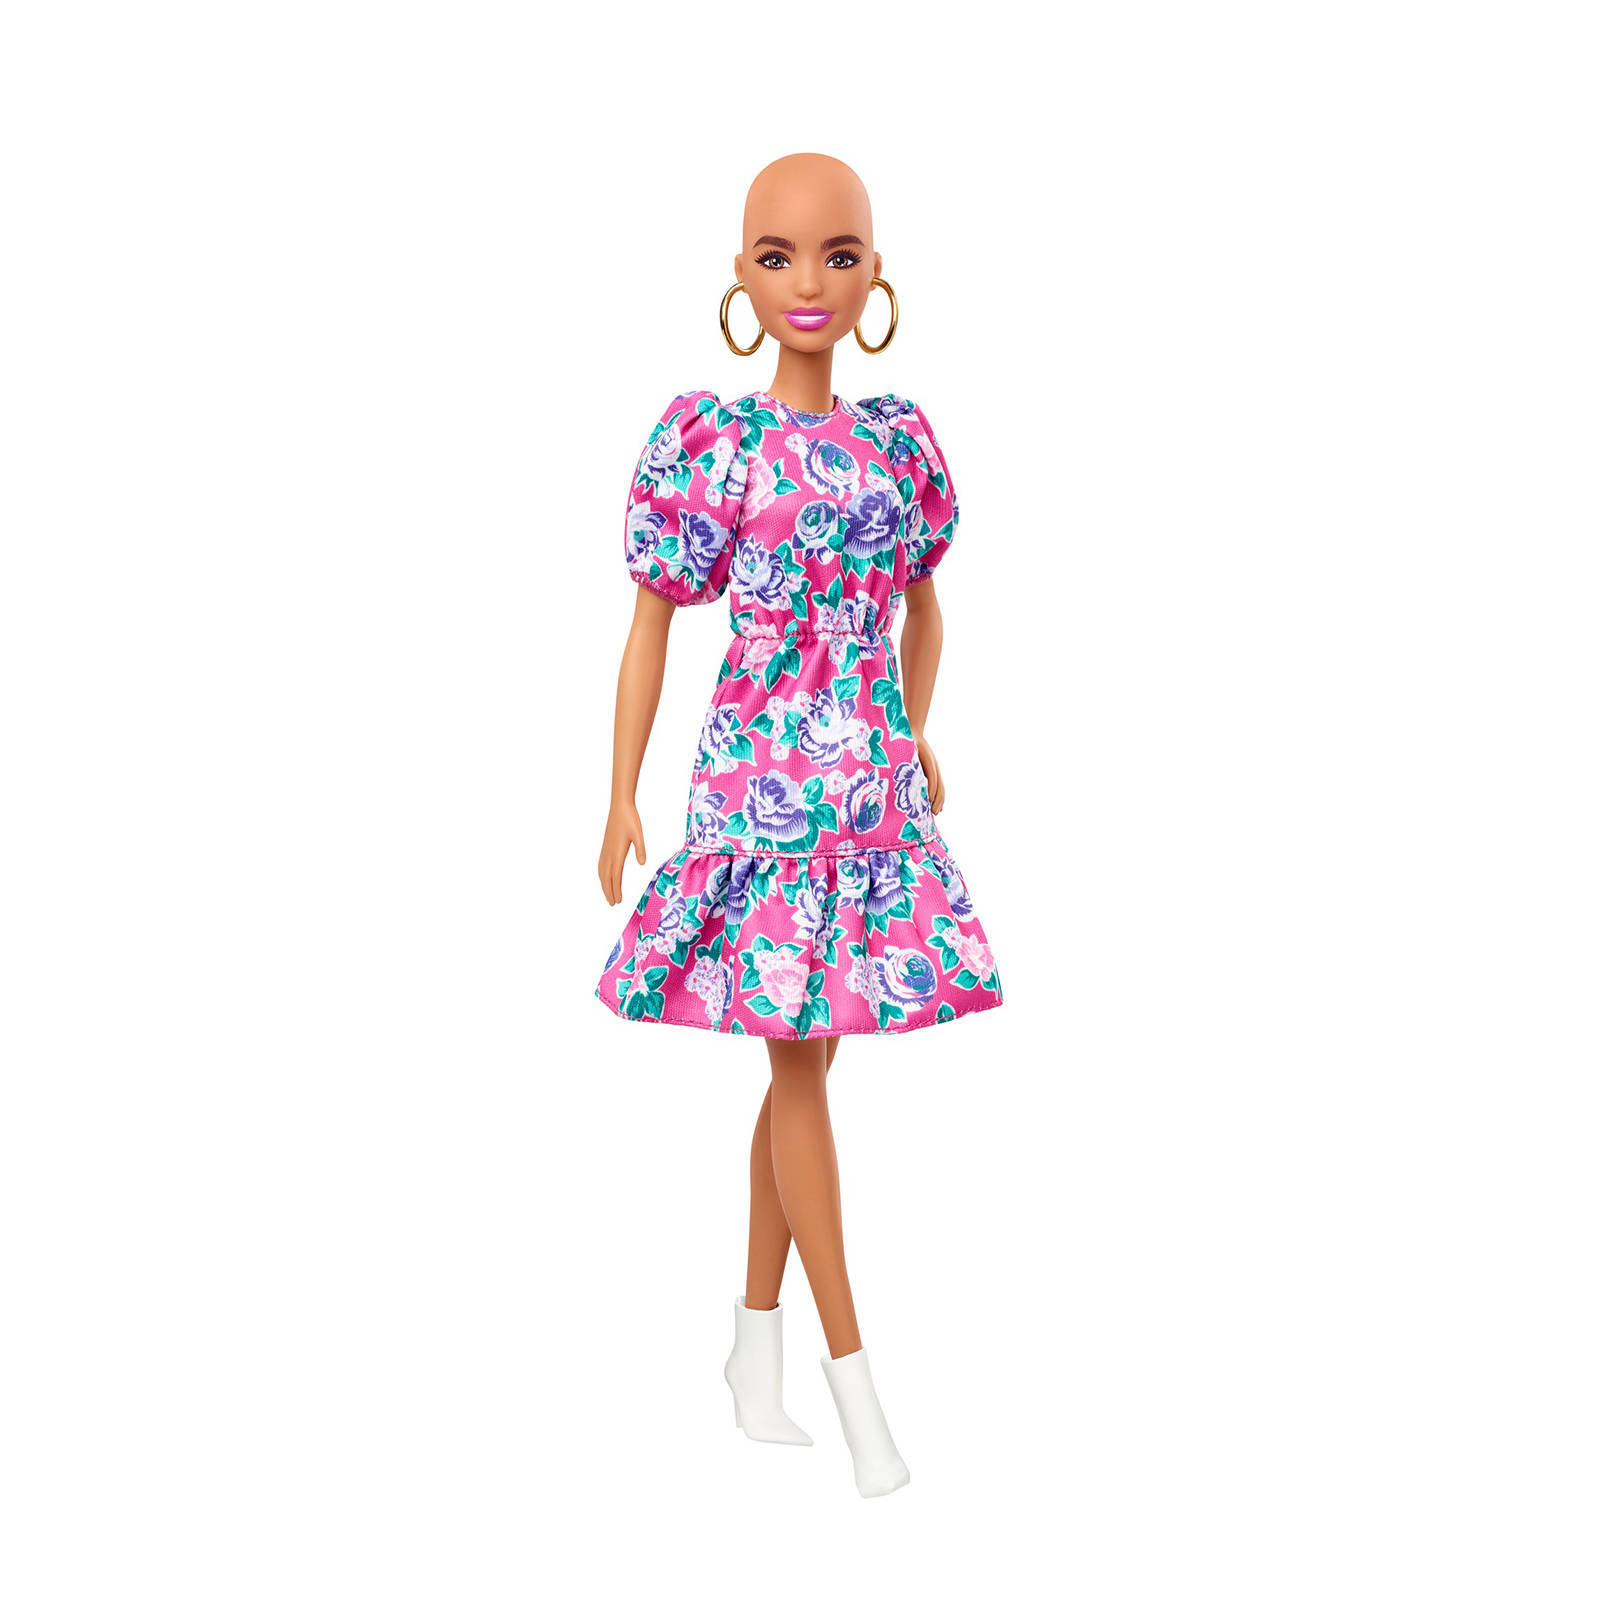 Barbie Tienerpop Fashionistas Meisjes 30 Cm Roze/wit online kopen